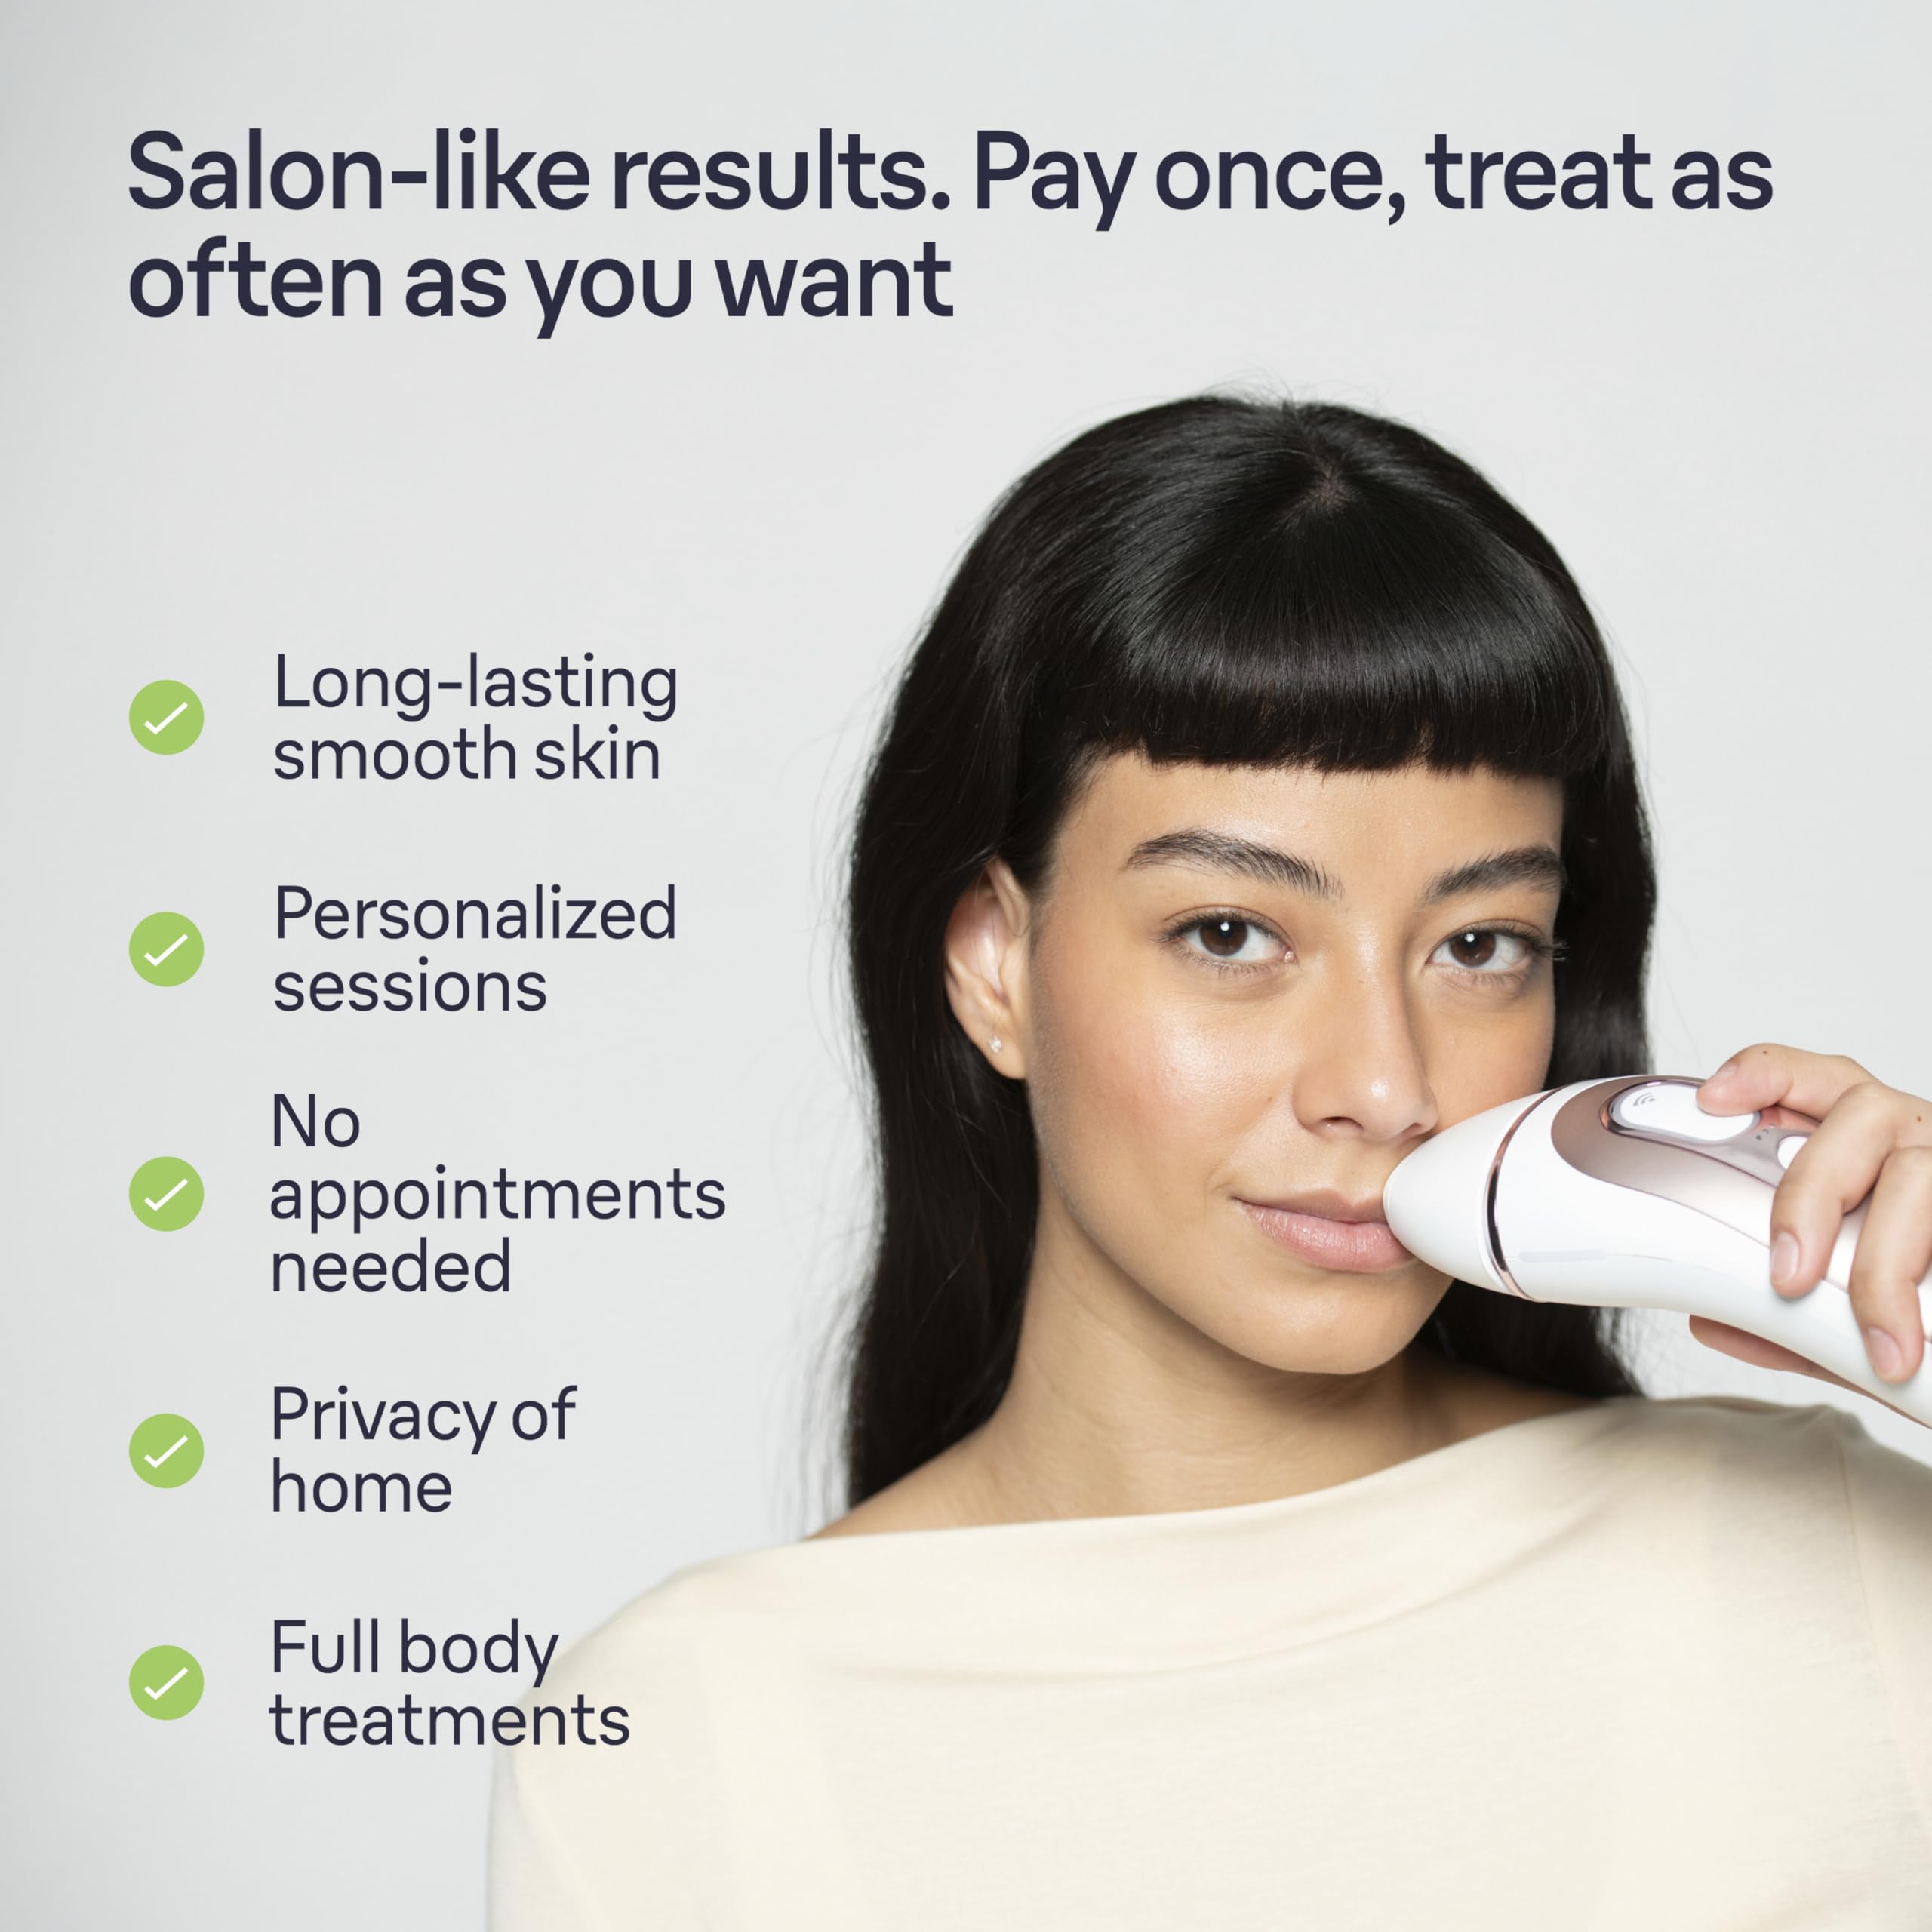 Braun IPL Long-lasting Laser Hair Removal Device for Women & Men, Skin i·Expert, at Home Hair Removal, w/ Free App, Vanity Case, Venus Razor, 4 Smart Heads, Alternative for Laser Hair Removal, PL7387